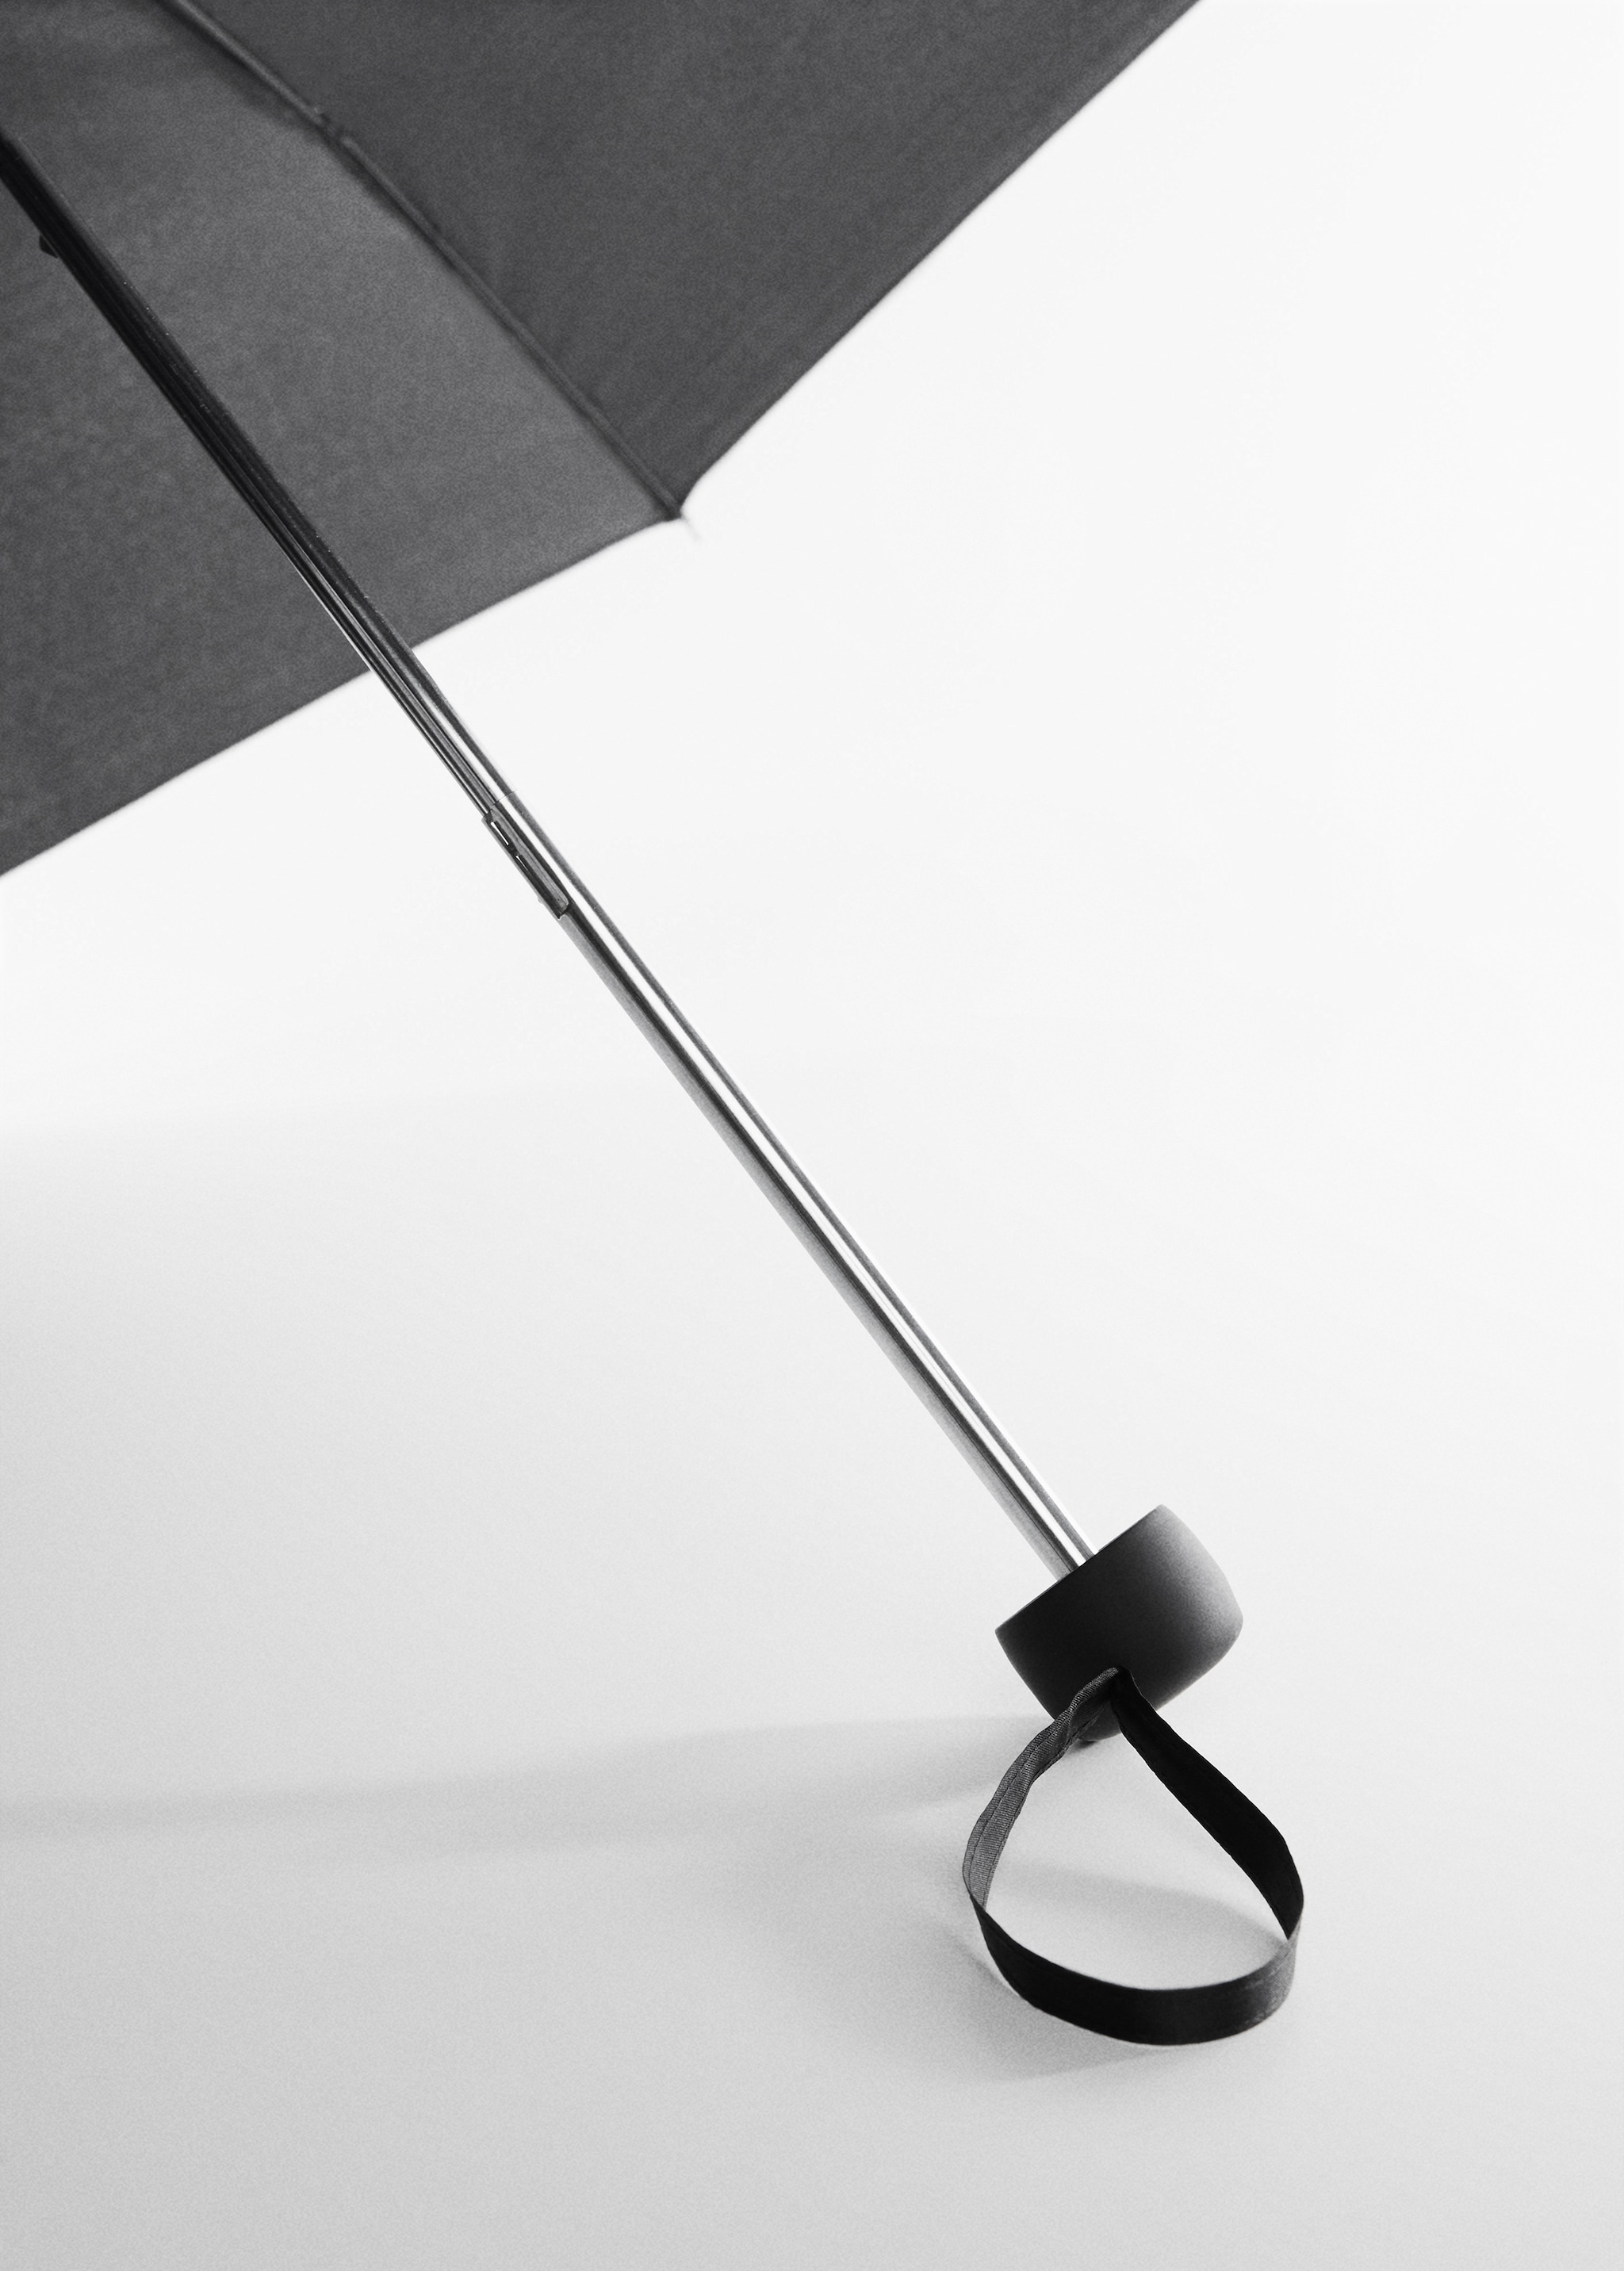 Plain folding umbrella - Details of the article 1